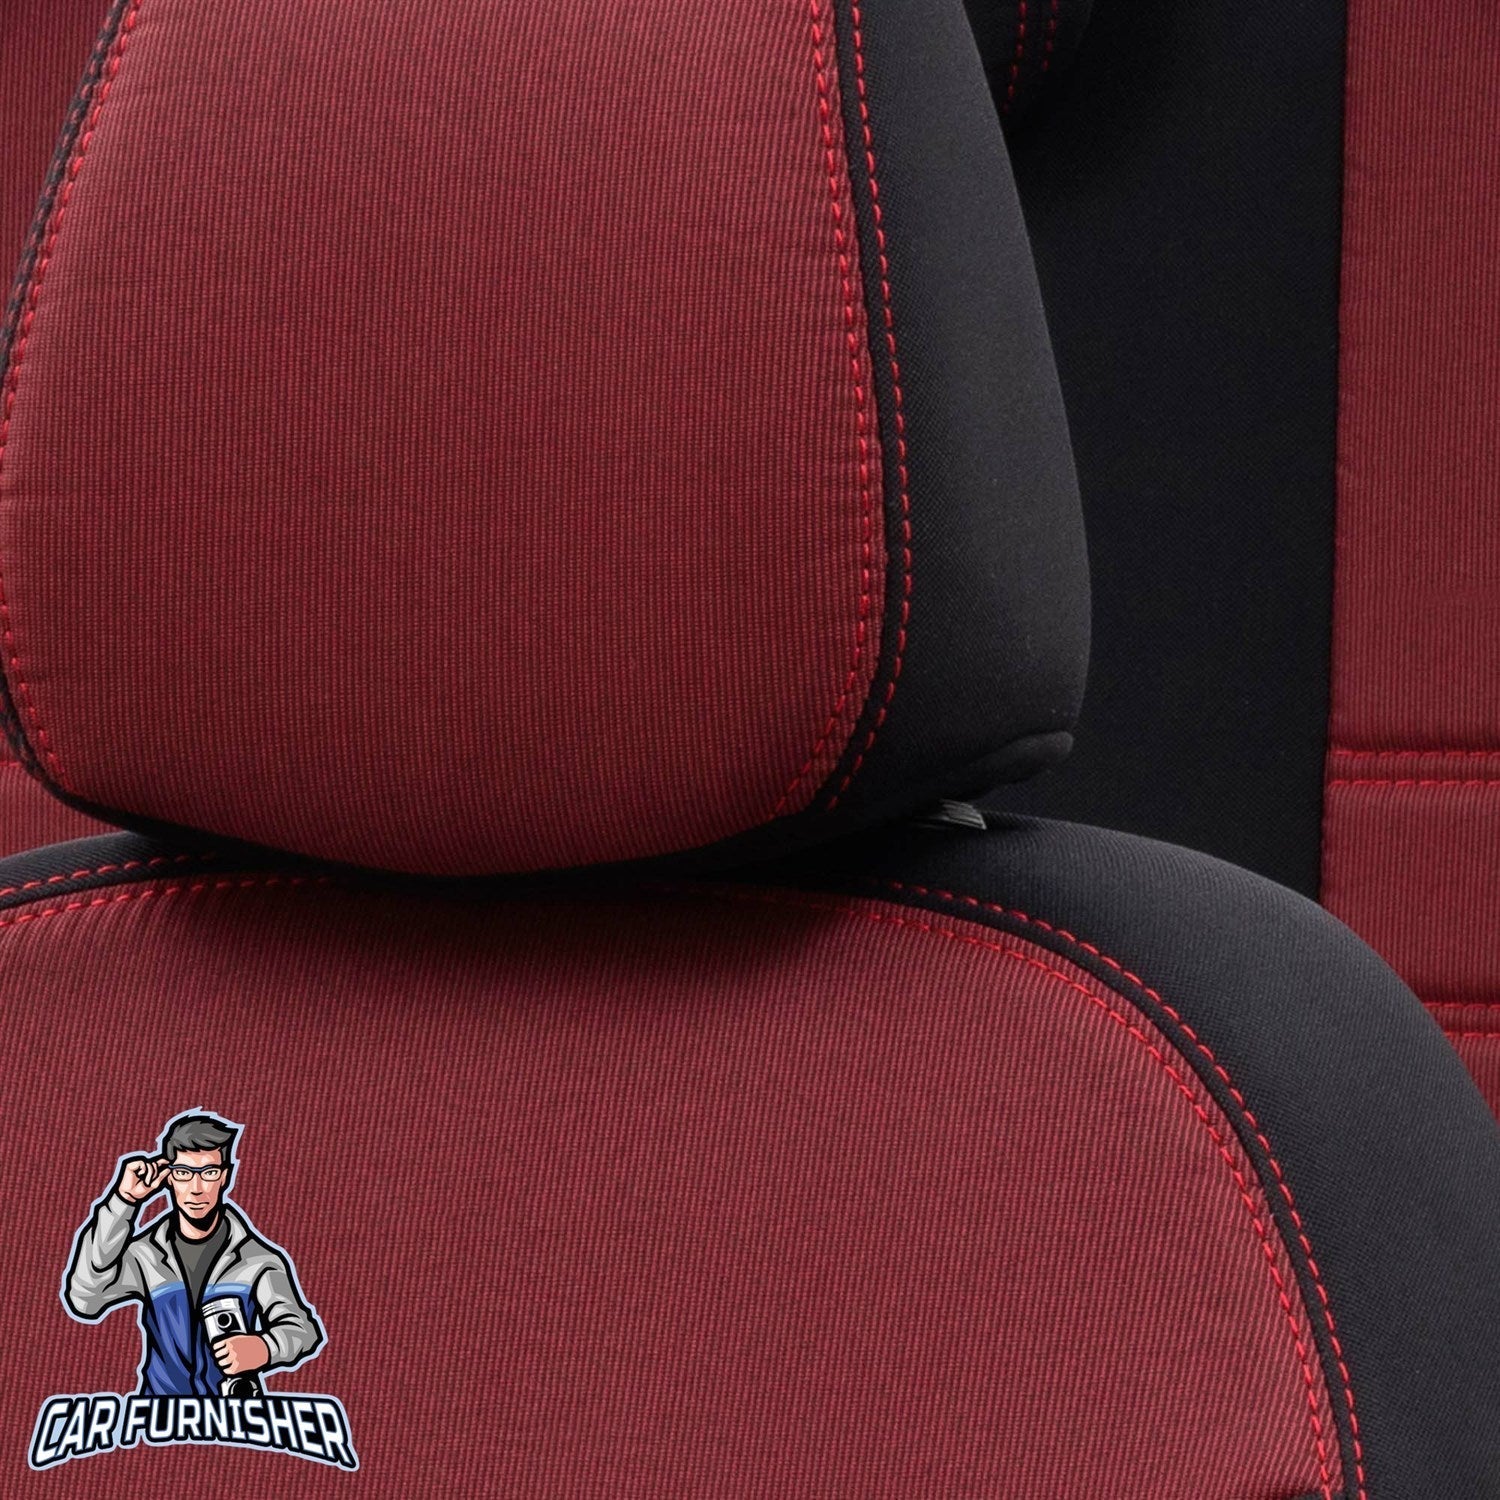 Mazda 626 Seat Cover Original Jacquard Design Red Jacquard Fabric